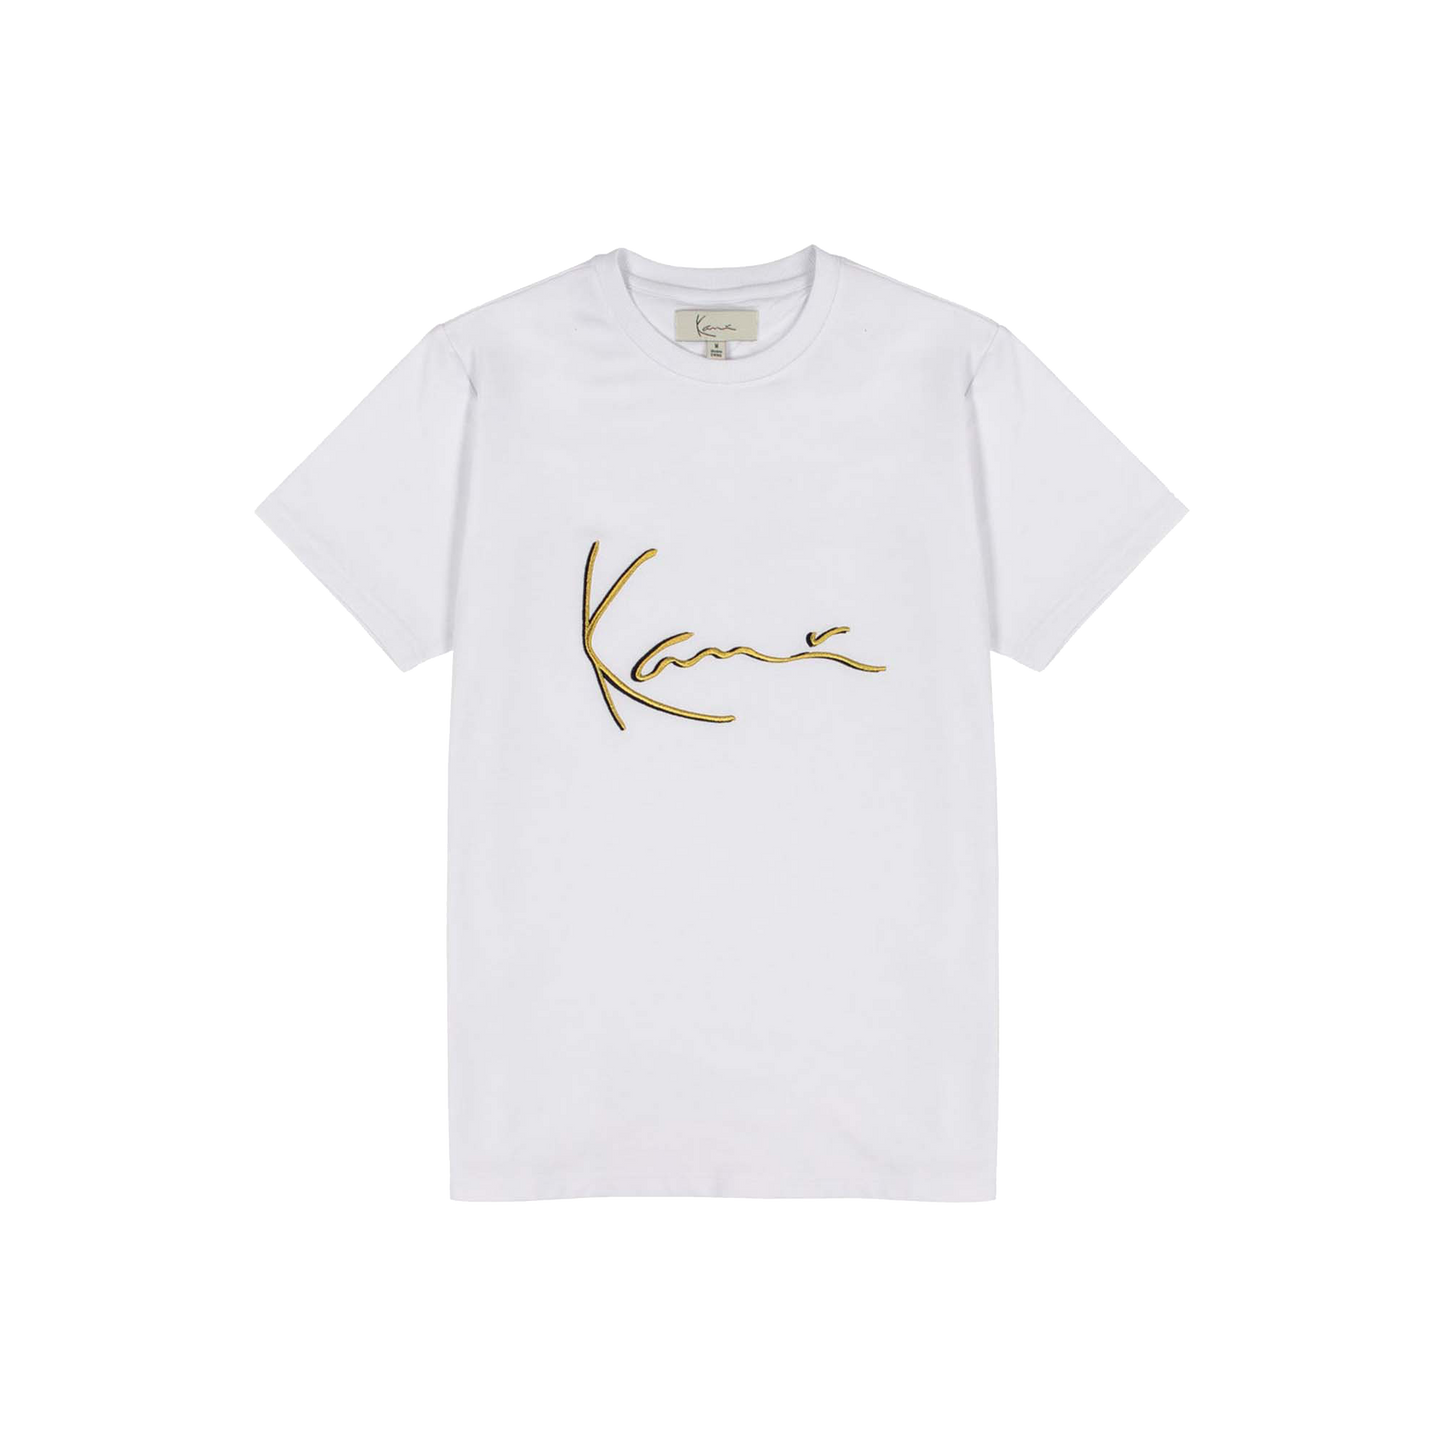 Iconic T-Shirt (White/Gold)